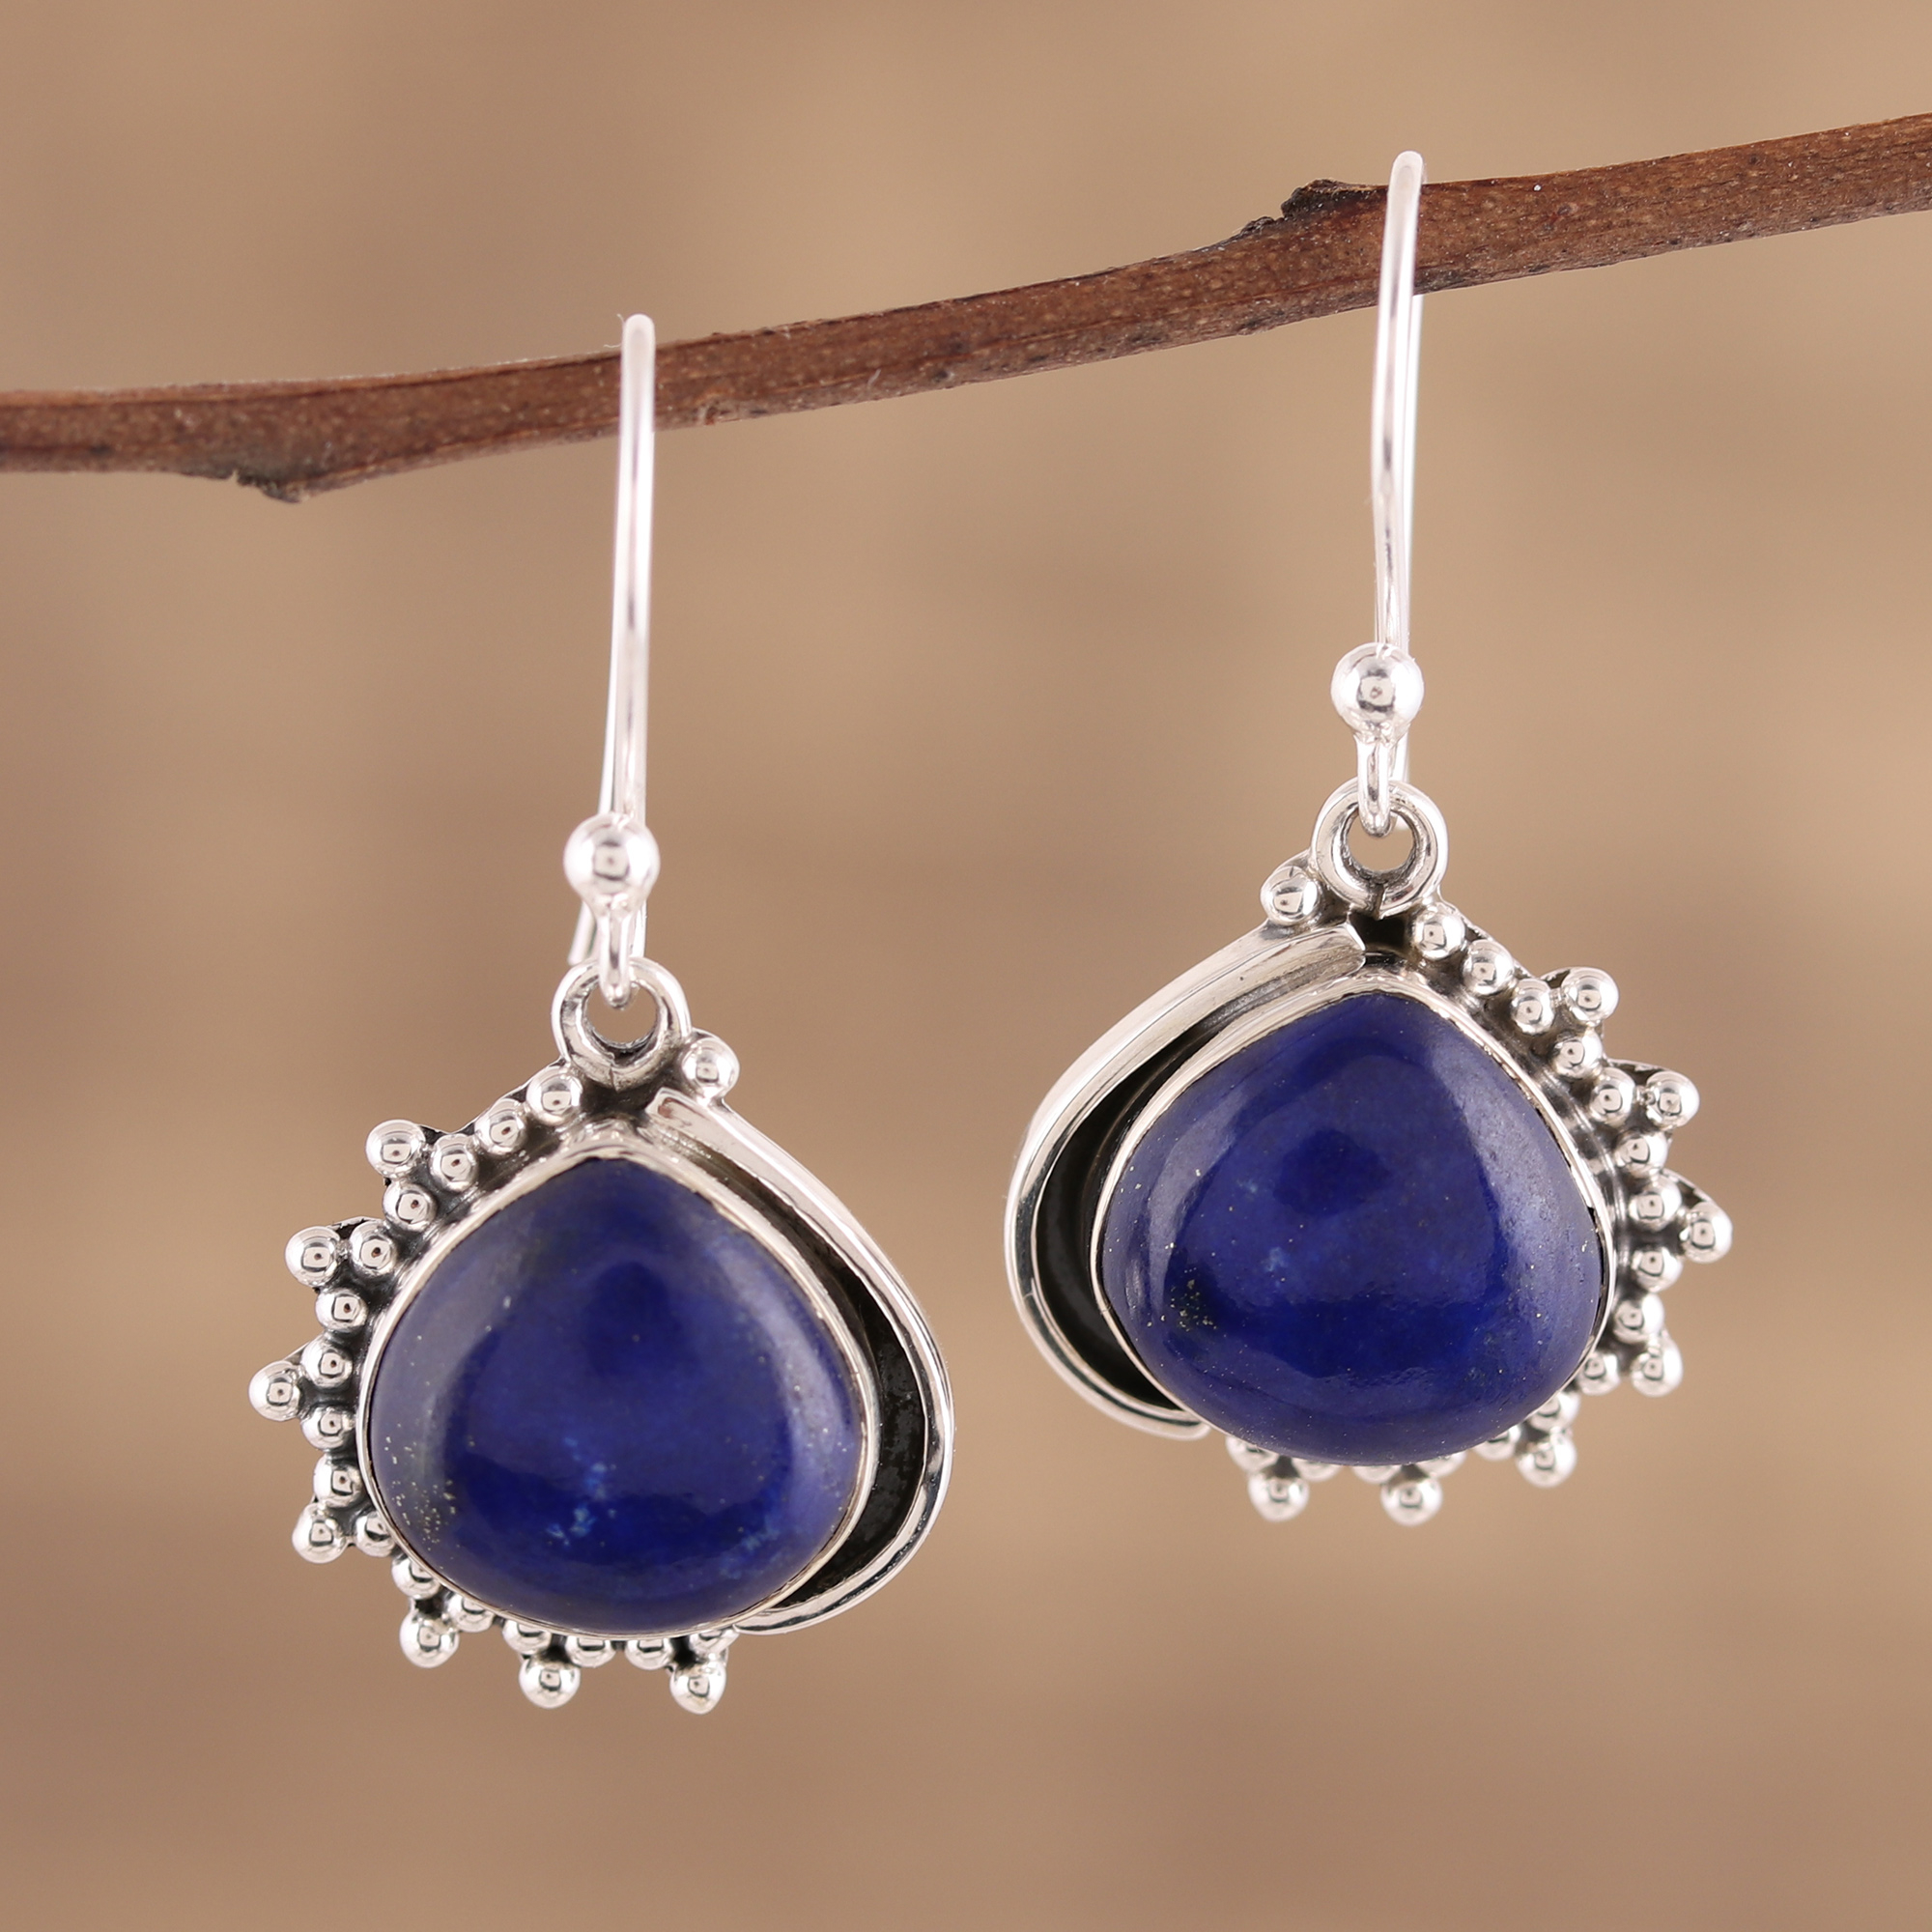 Hand made Lapis lazuli earrings